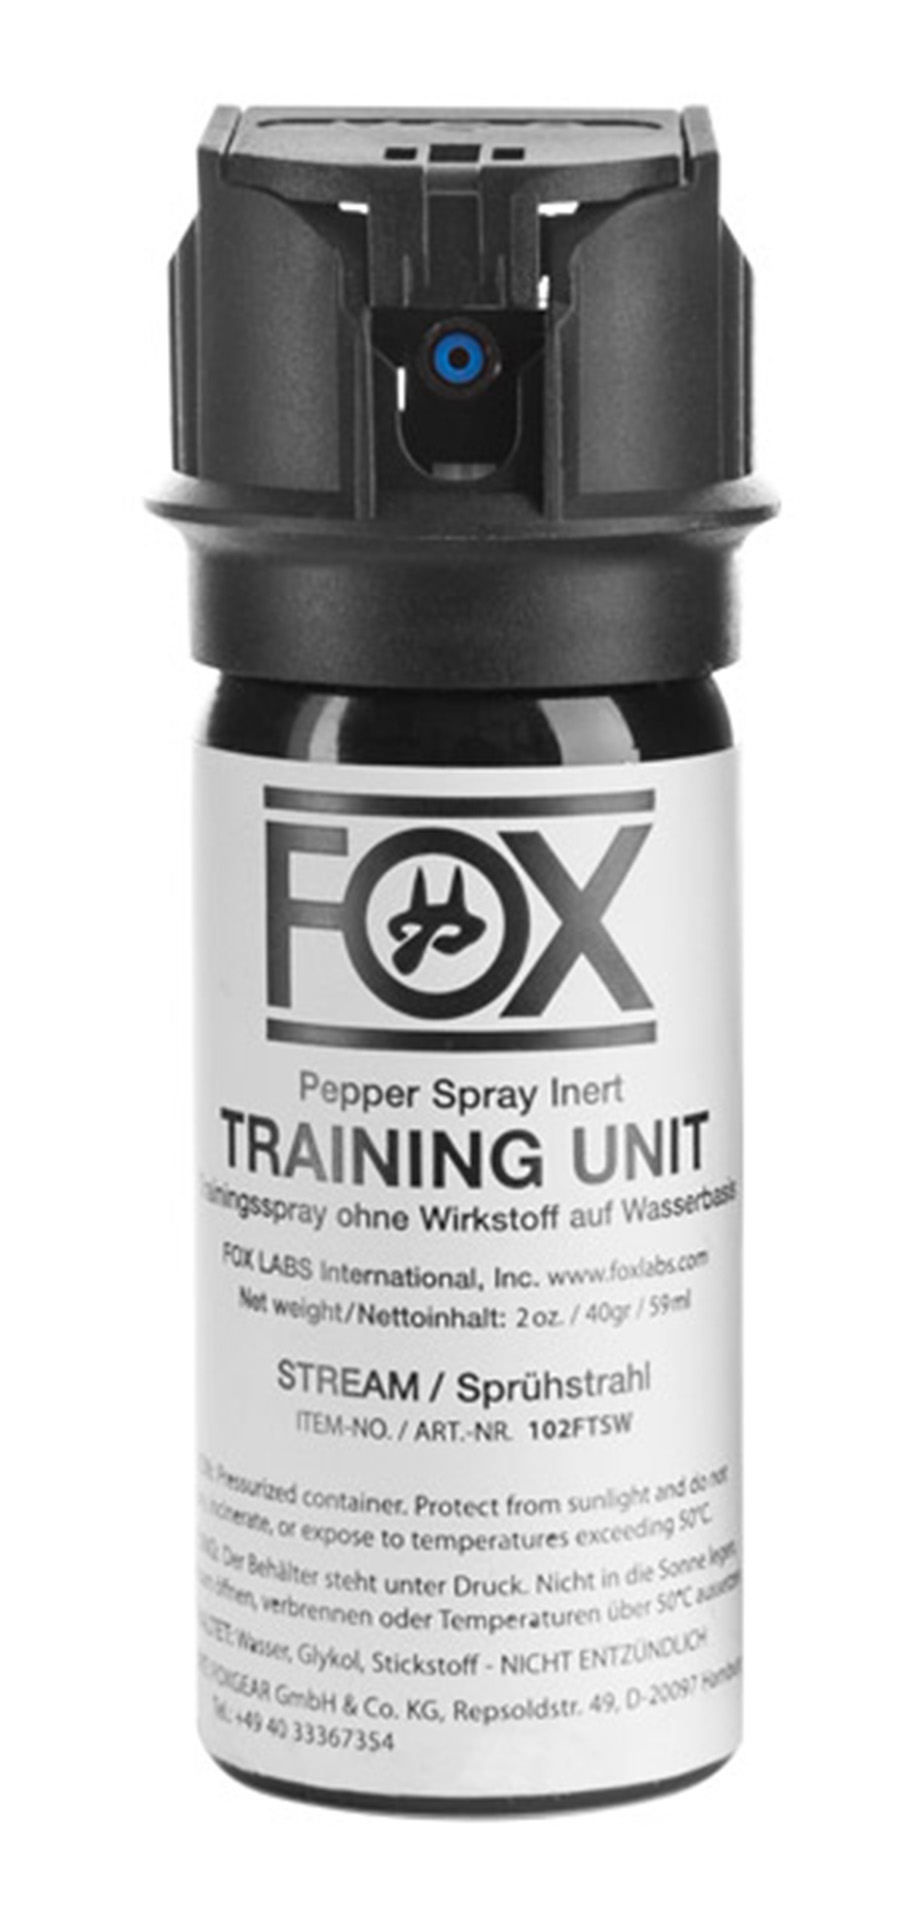 https://kwon.hu/wp-content/uploads/2020/09/Fox-Fox-Labs-Trainingsspray.jpg